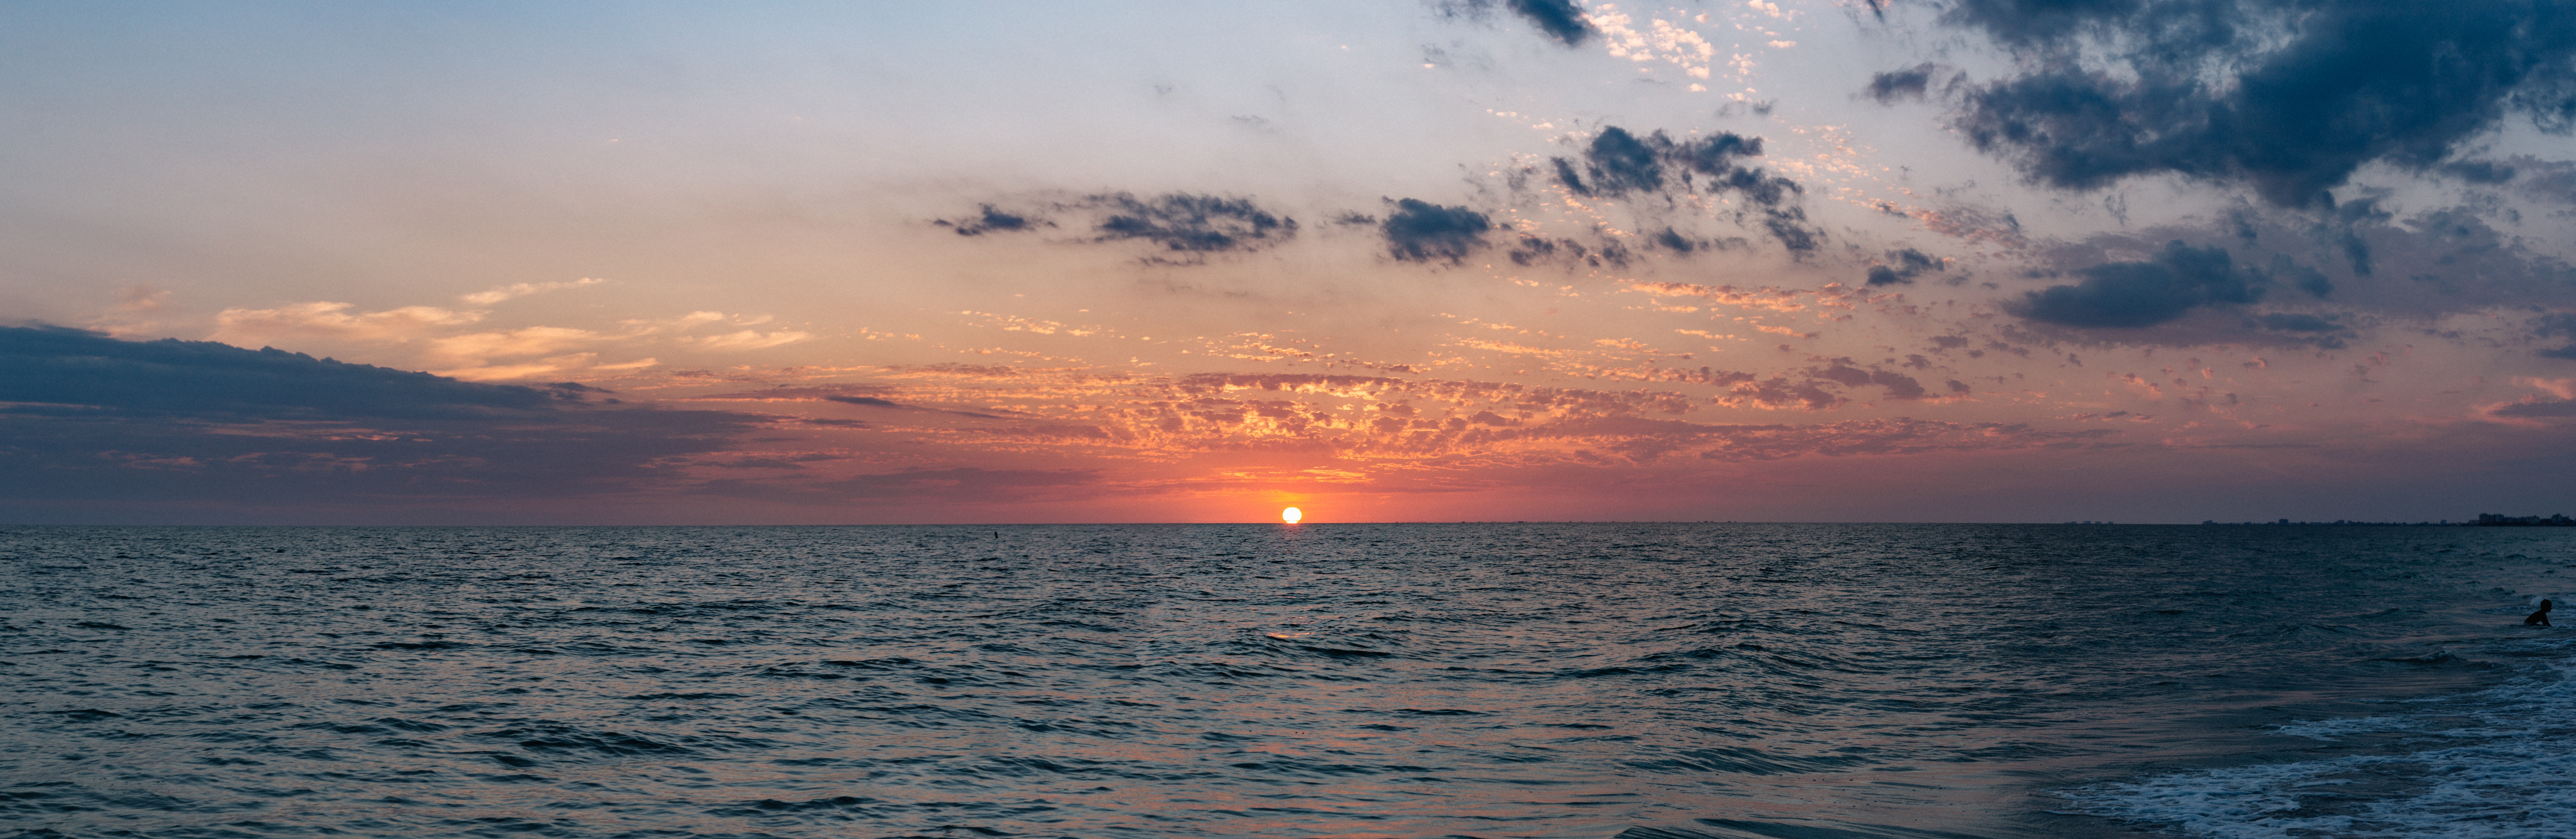 Ocean Sunset Stock Image